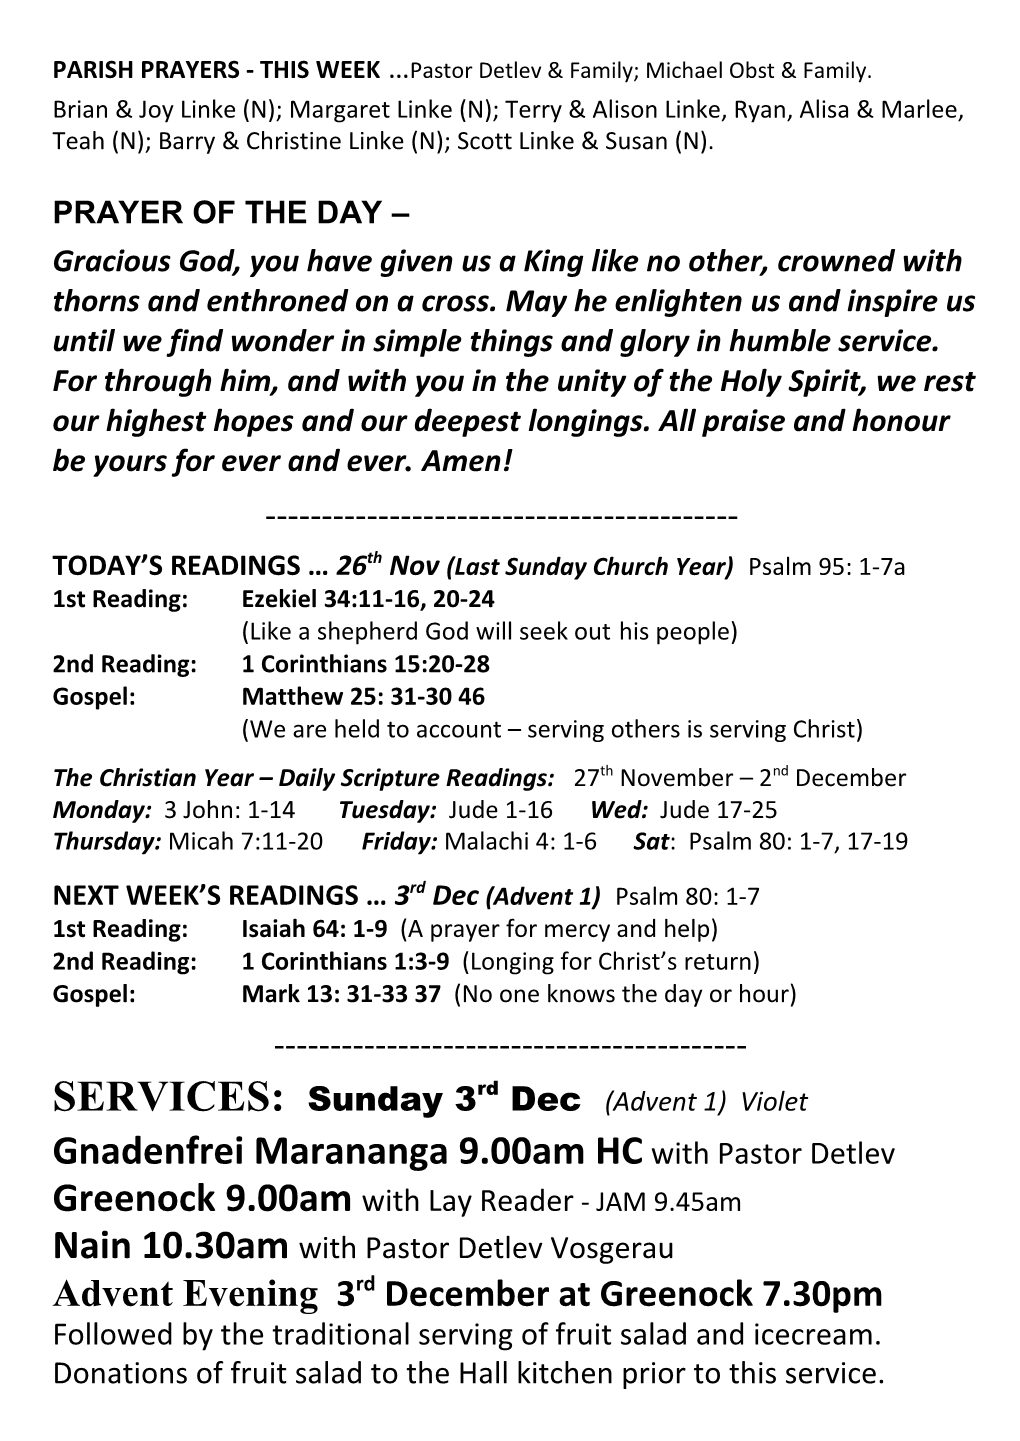 Greenock Lutheran Parish Bulletin